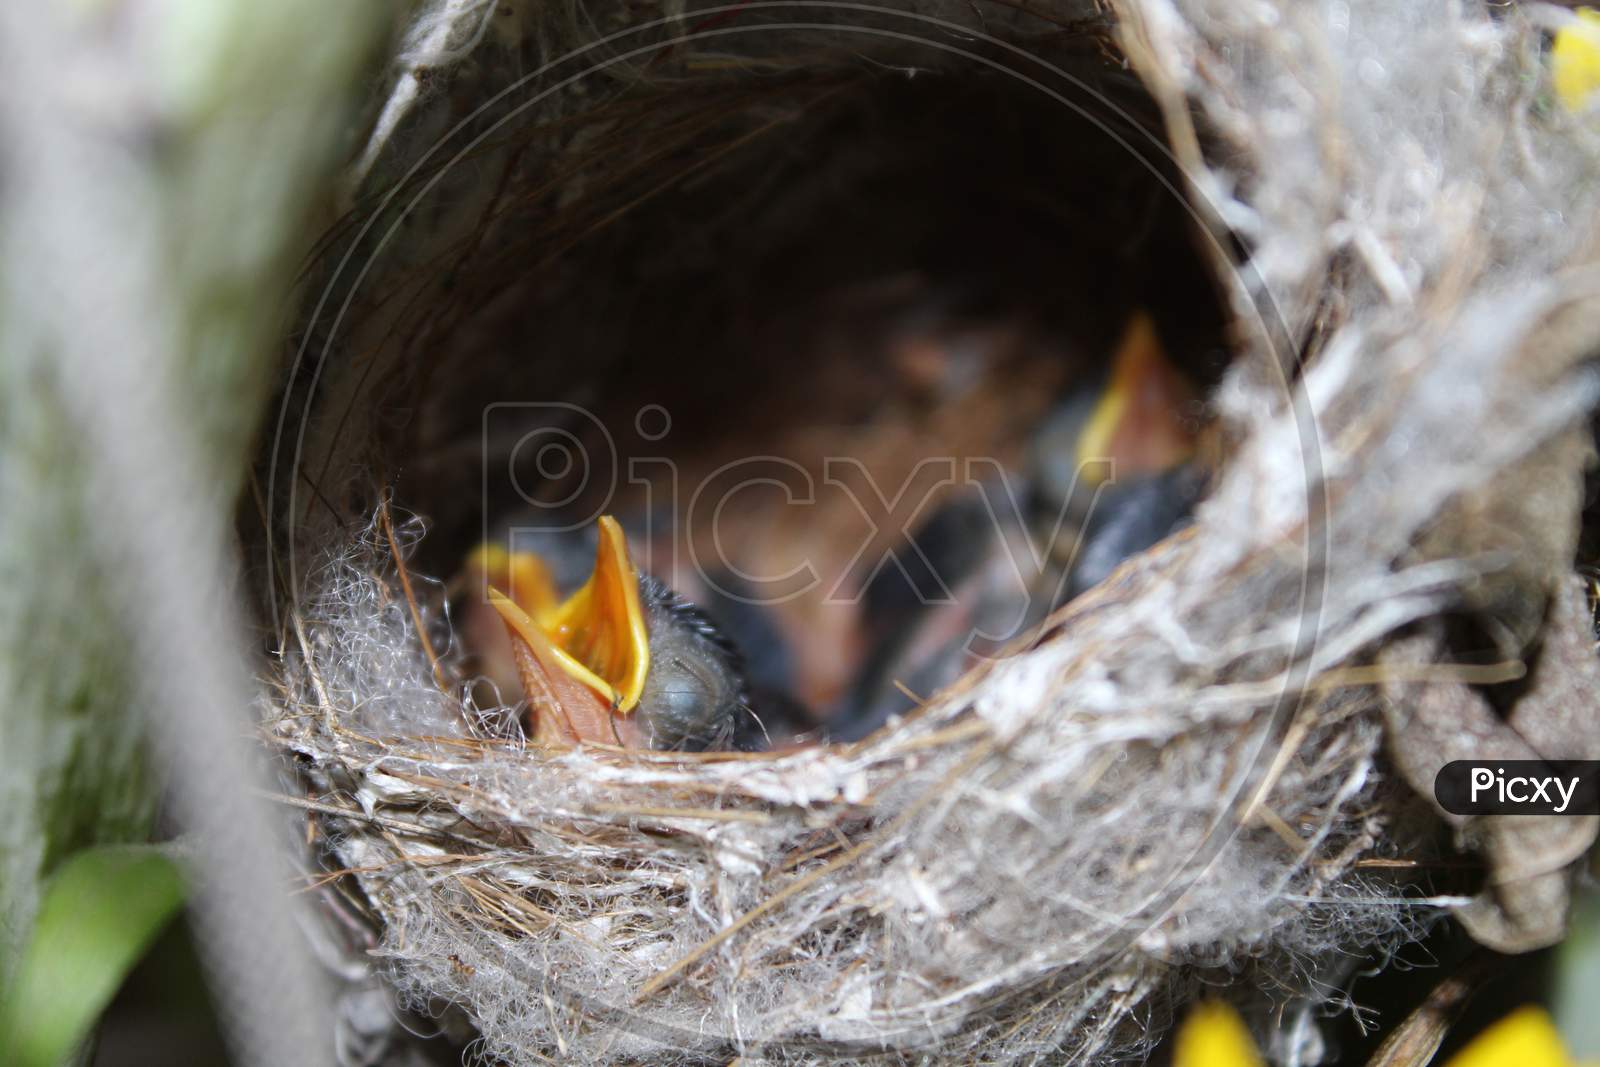 nestlings in the nest waiting for the mother bird